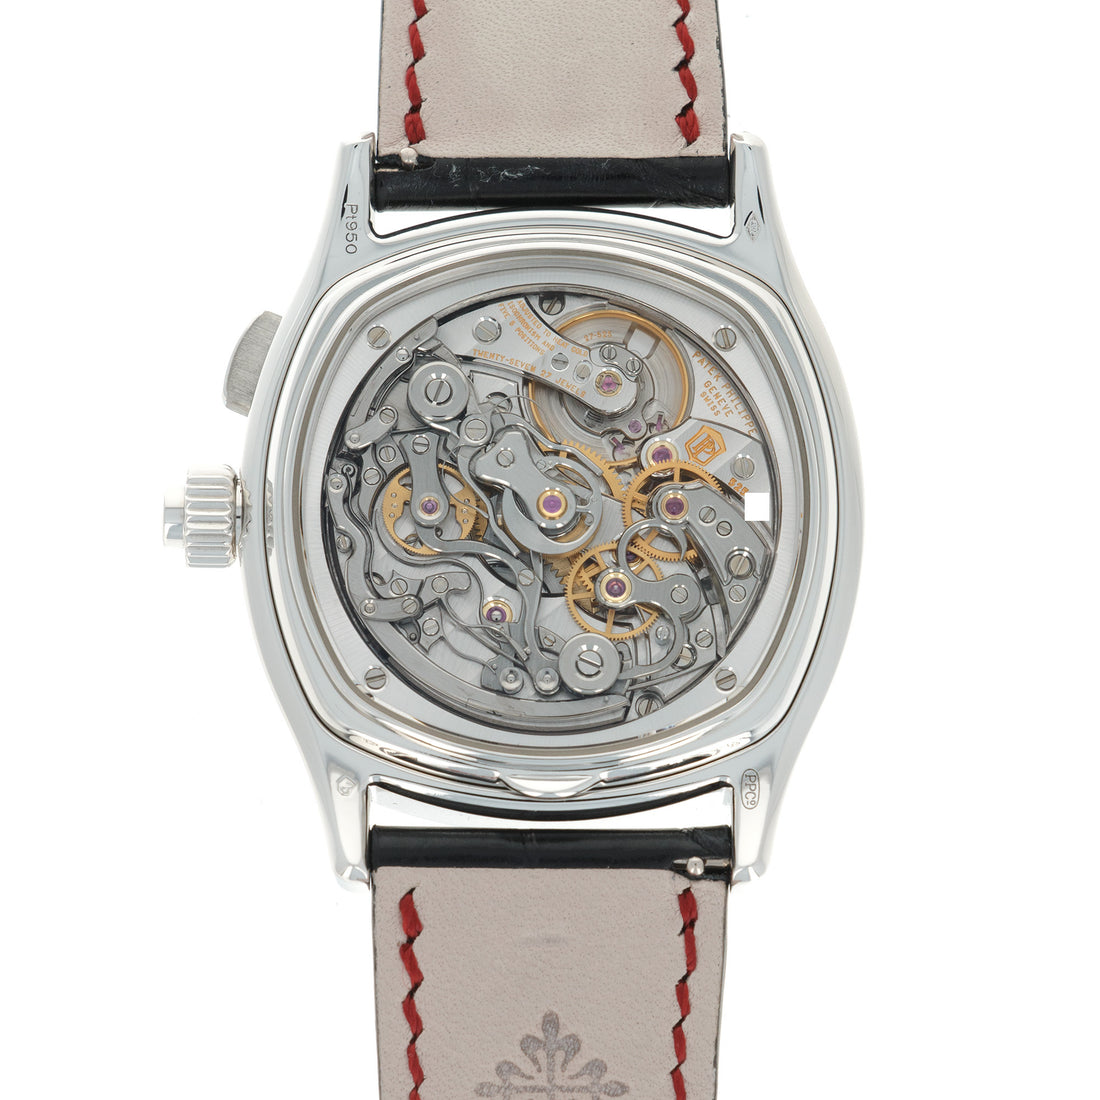 Patek Philippe Platinum Split Seconds Perpetual Monopoissor Chronograph Watch Ref. 5951